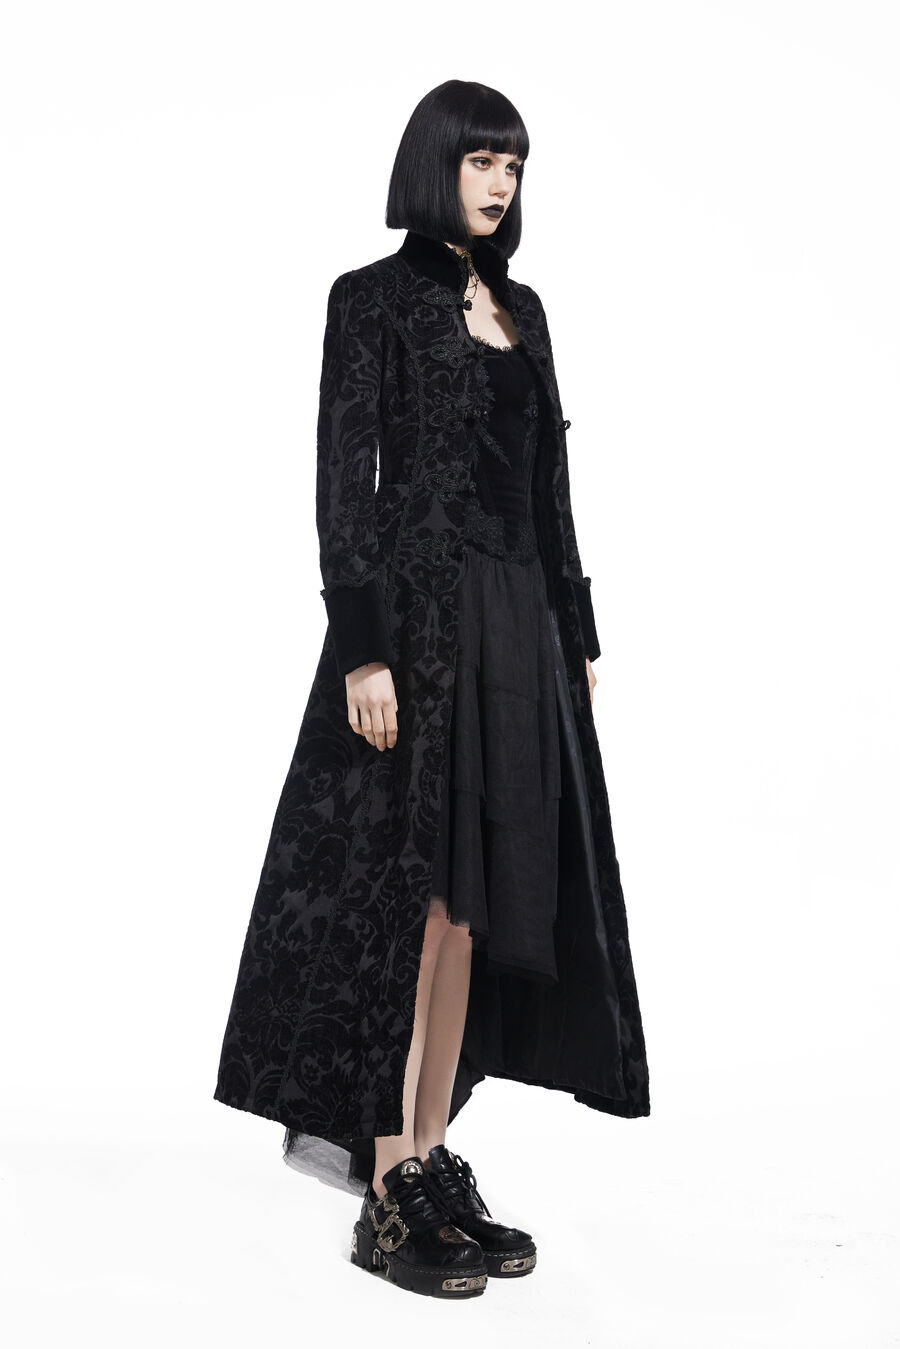 photo n°7 : Manteau long femme gothic brocard noir